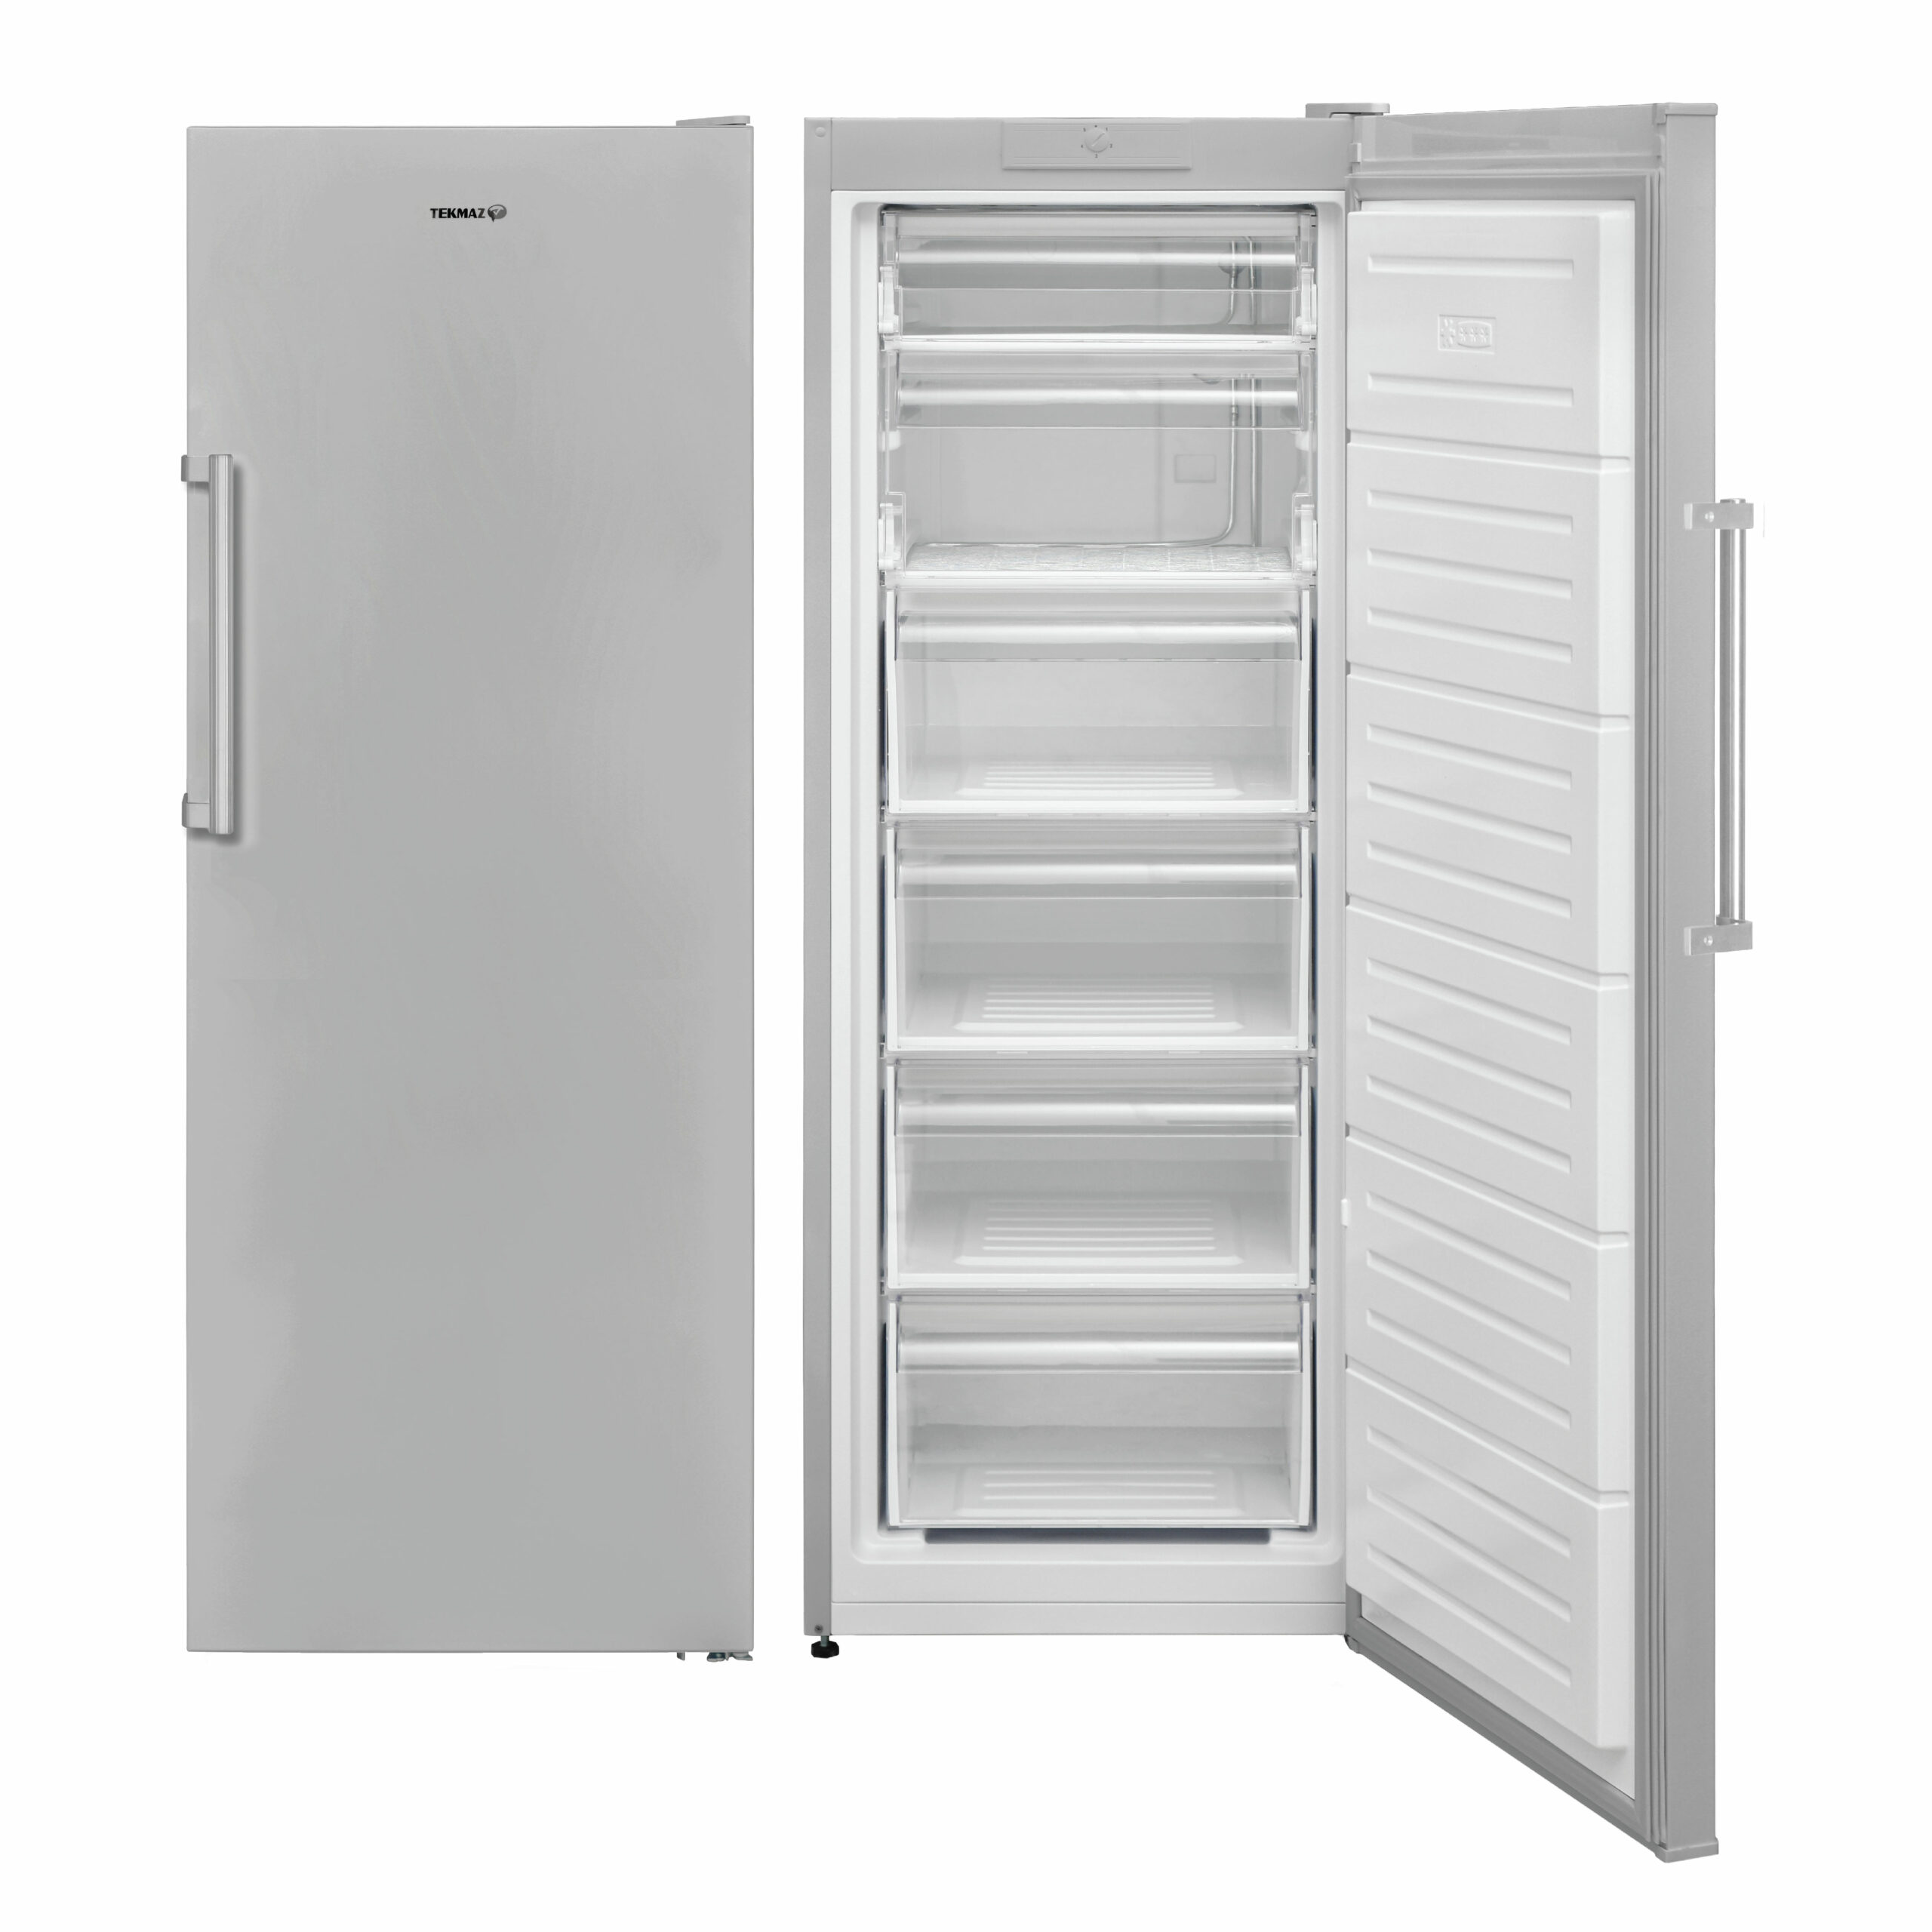 Tekmaz upright freezer, 5 drawers, 182 liters - silver